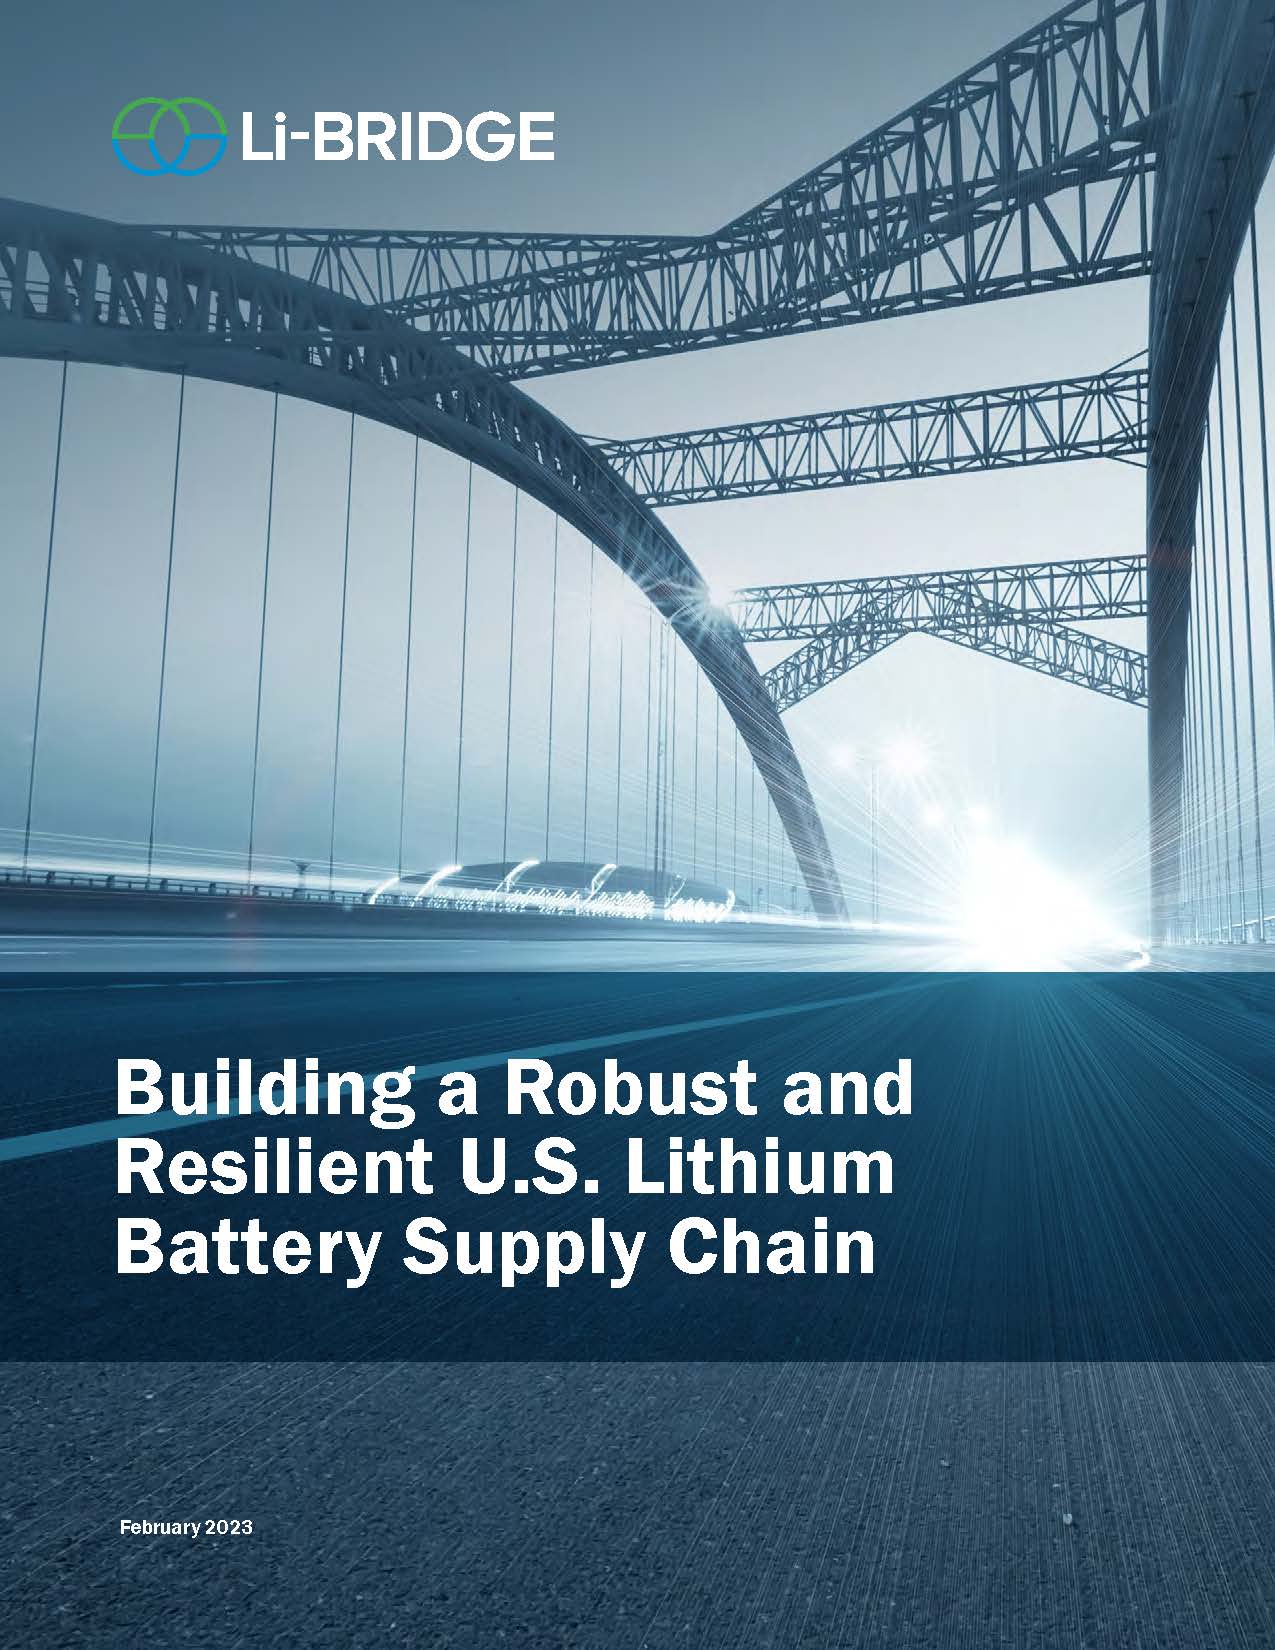 Cover of Li-Bridge Industry Report with image of large steel bridge